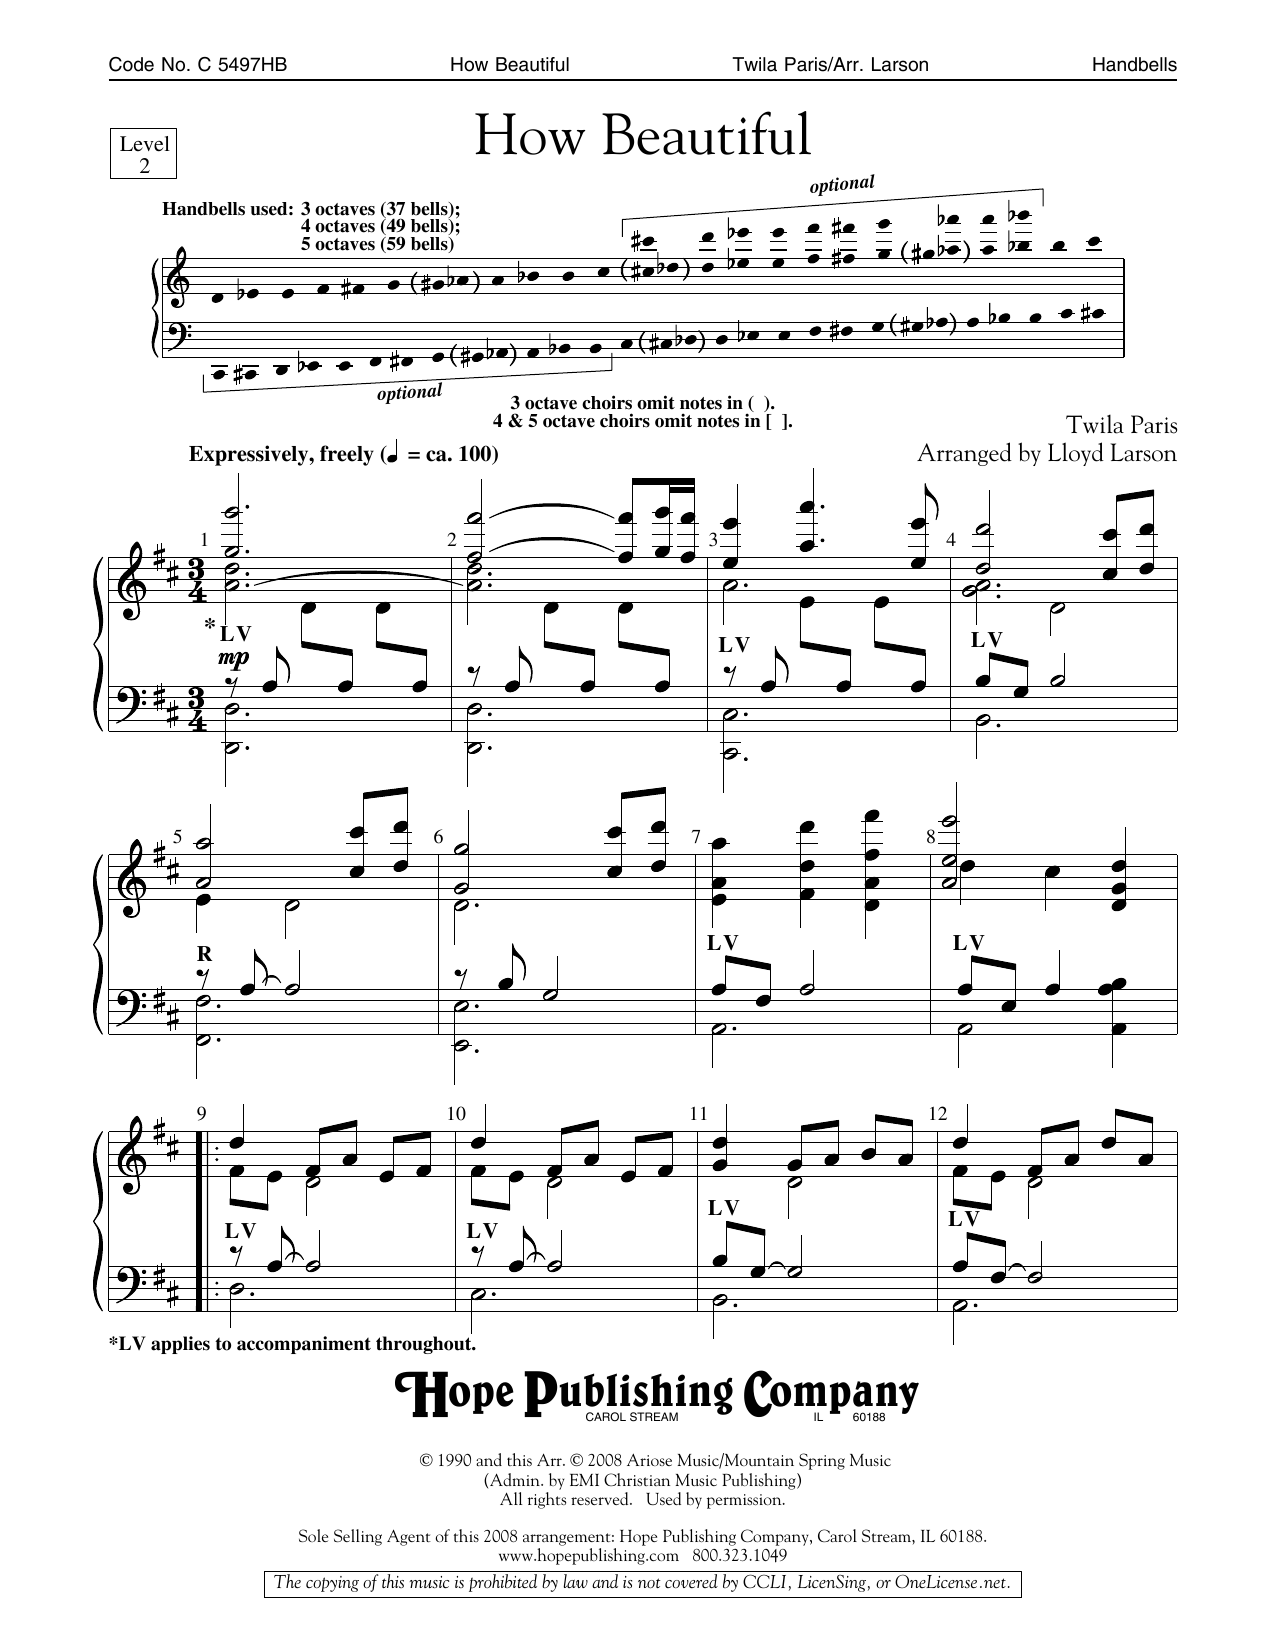 Lloyd Larson How Beautiful - Handbells Sheet Music Notes & Chords for Choir Instrumental Pak - Download or Print PDF